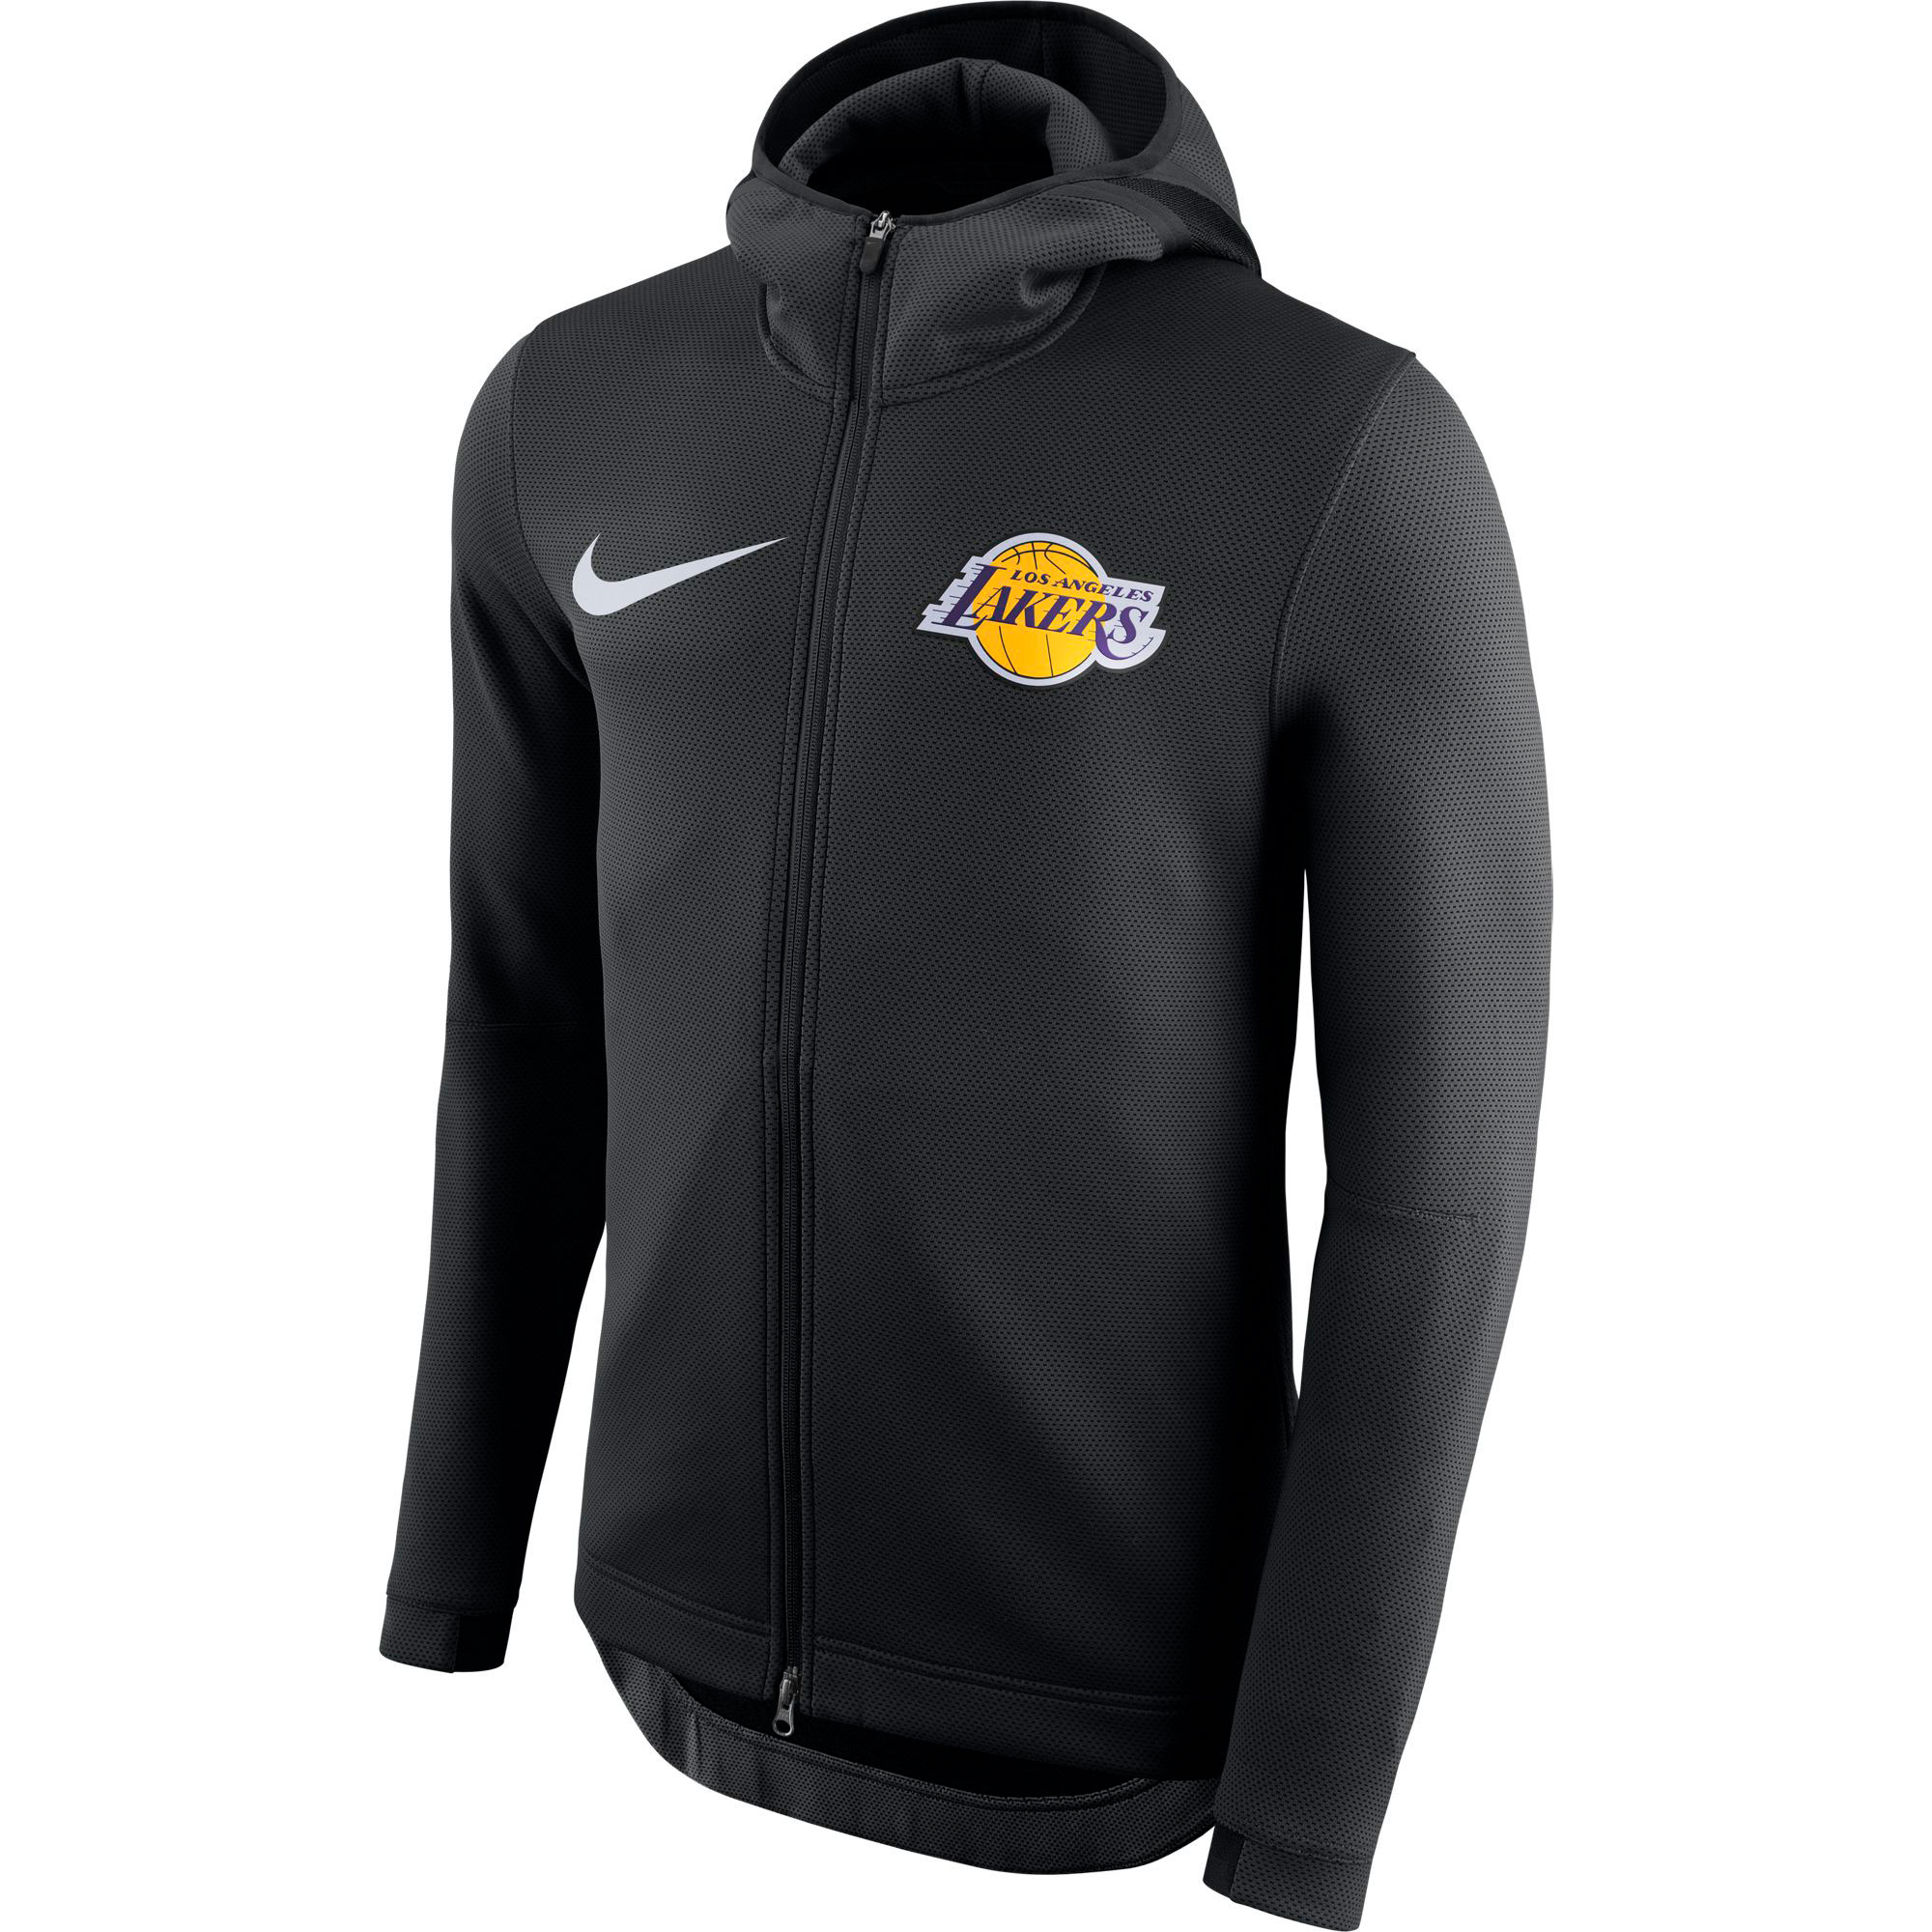 "Los Angeles Lakers Nike Therma Flex Showtime Jacket - Black - Mens"